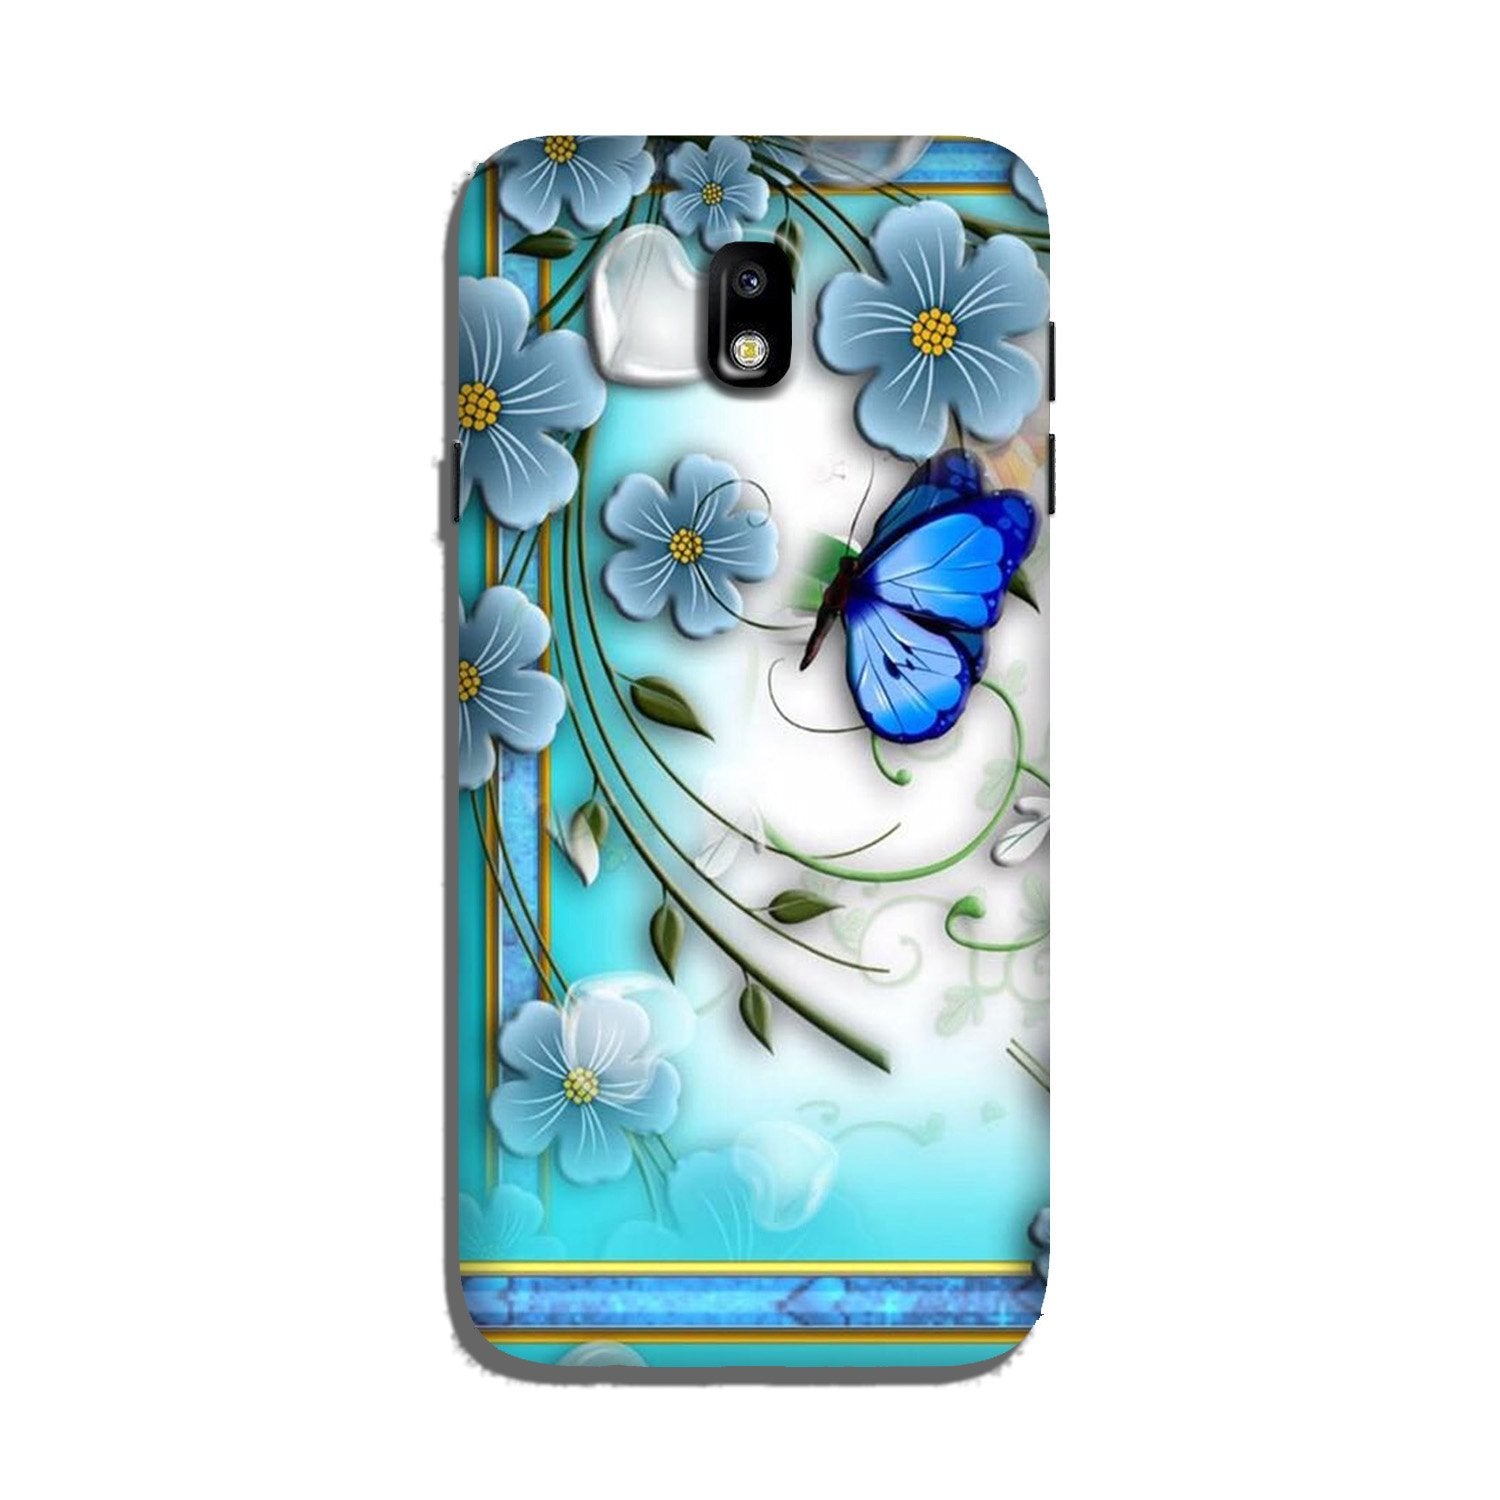 Blue Butterfly Case for Galaxy J7 Pro